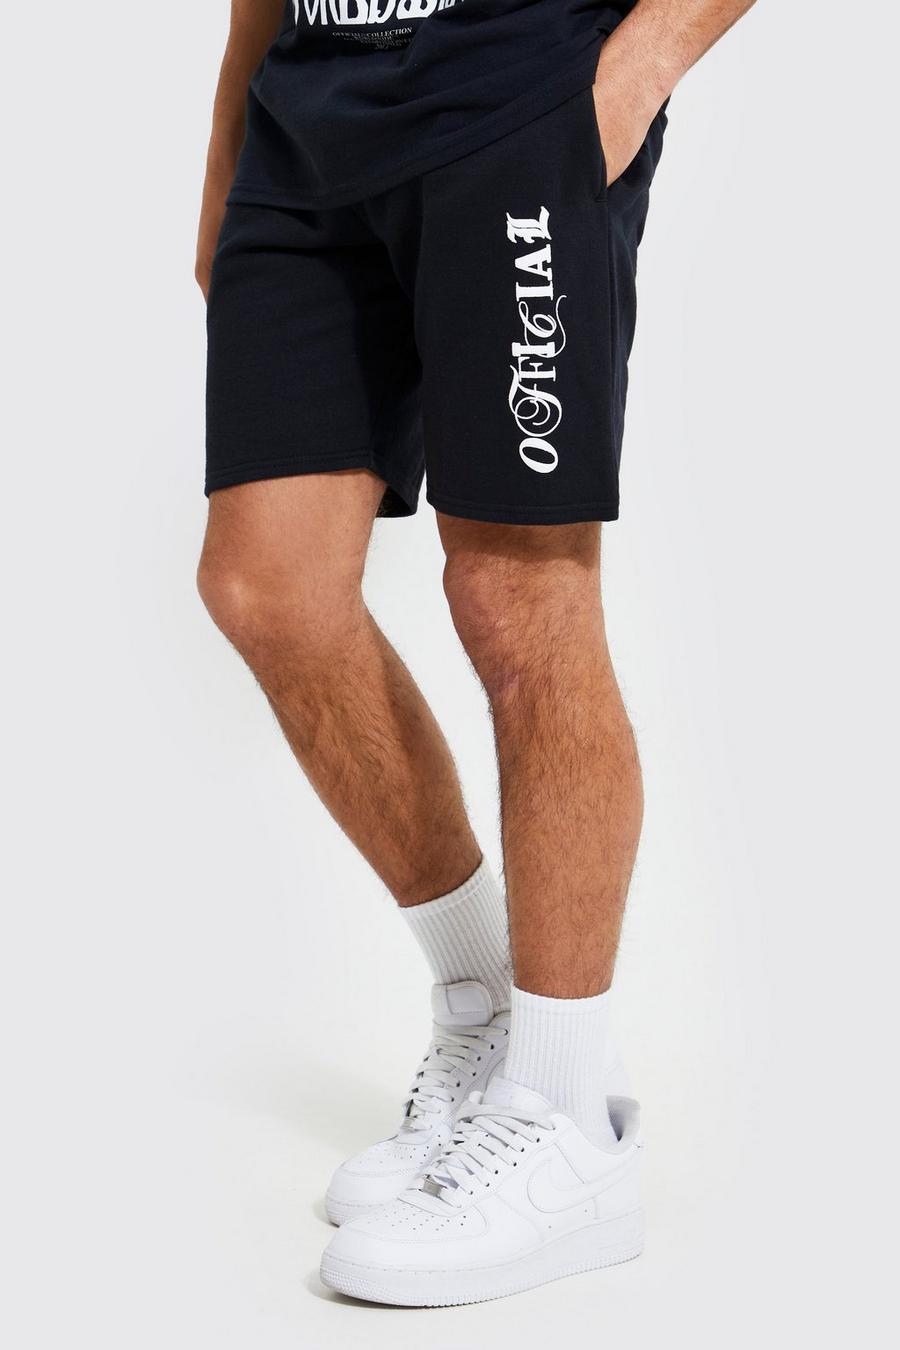 Jersey-Shorts mit Official Print, Black noir